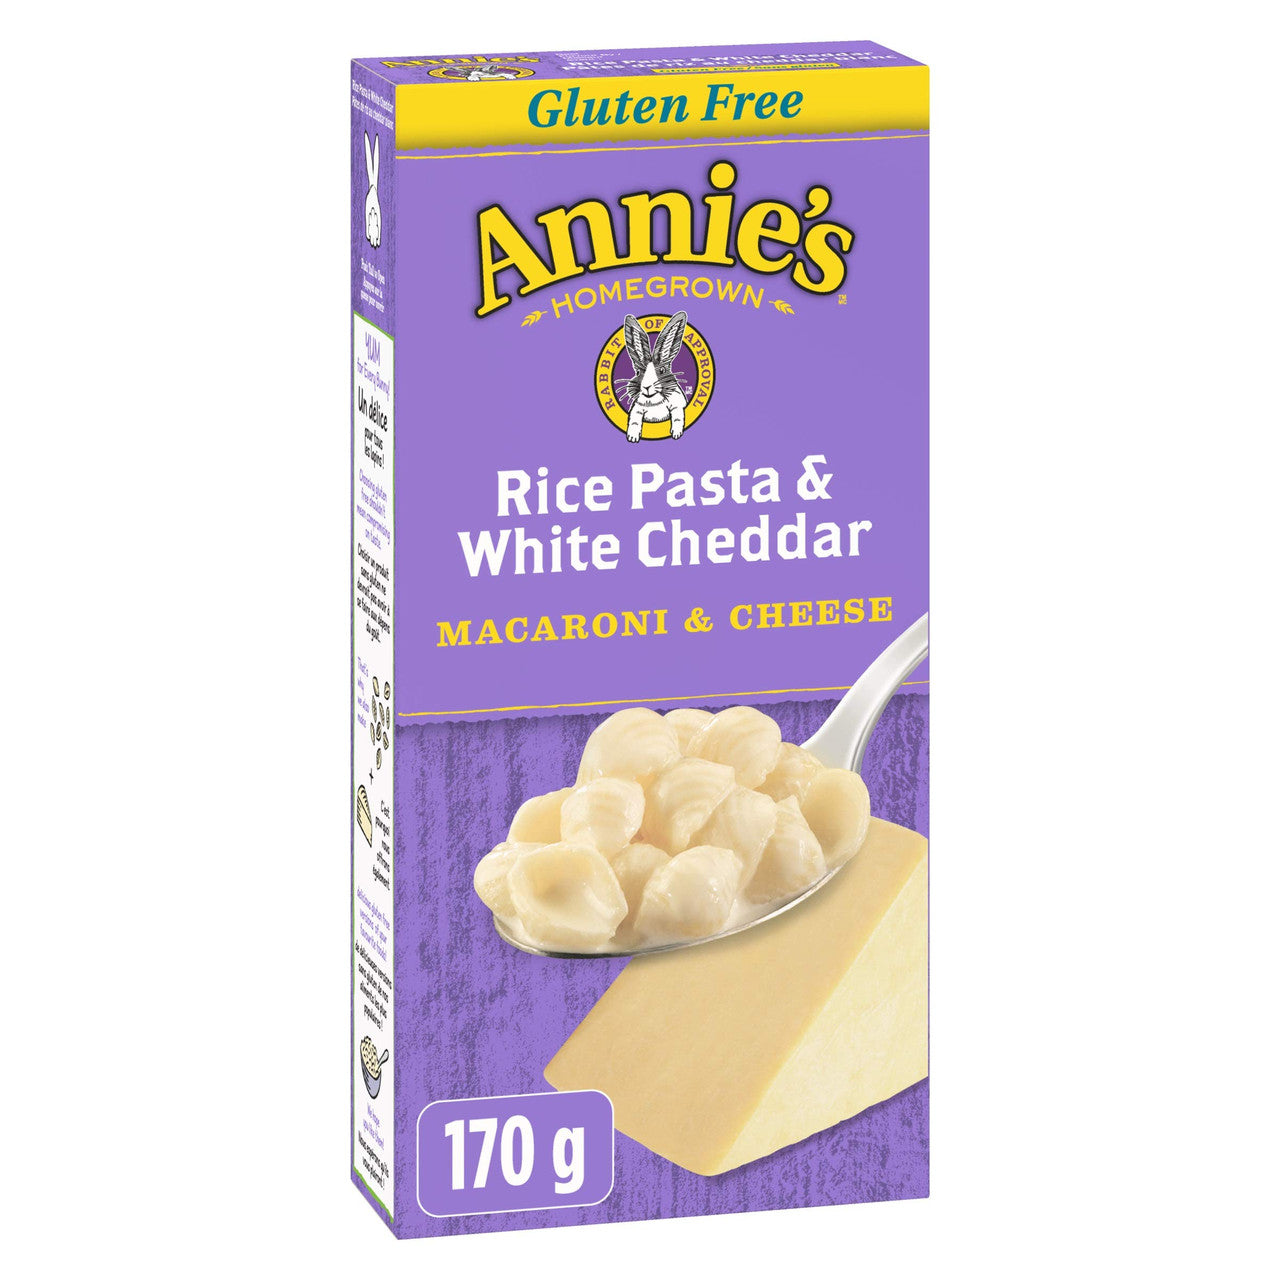 Annie's Homegrown Gluten Free White Cheddar Macaroni & Cheese, 170g/6 oz.